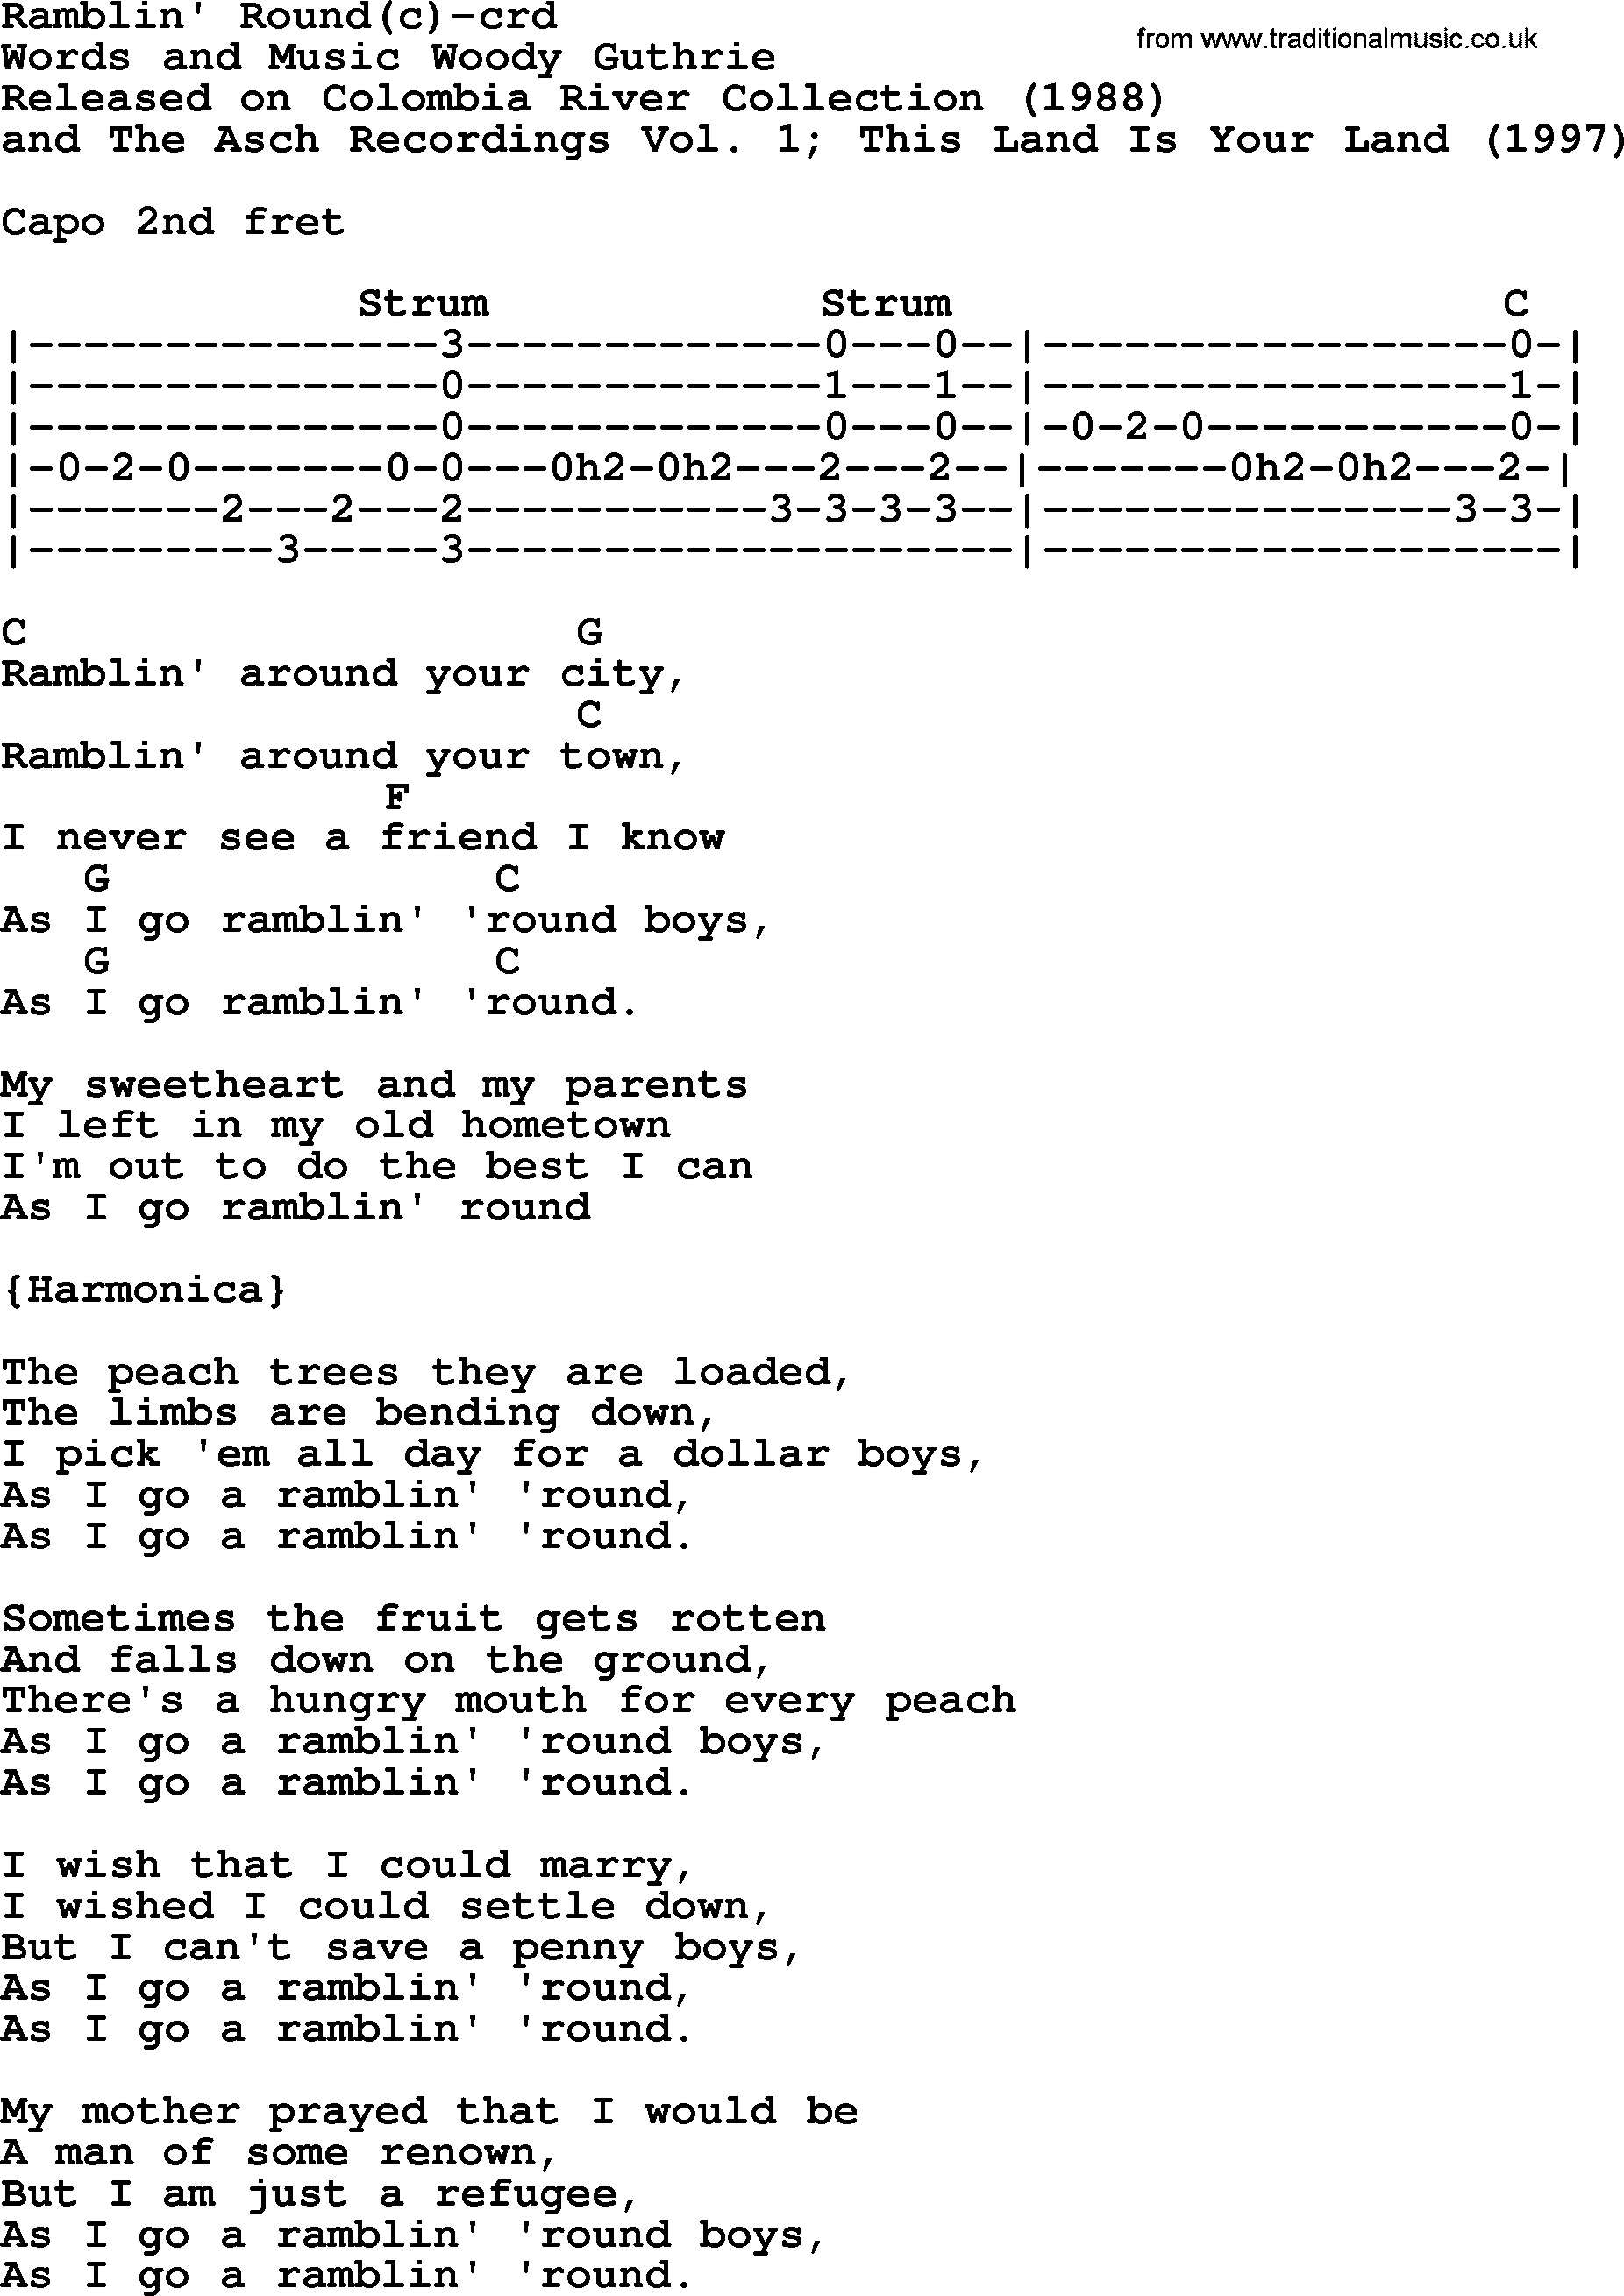 Woody Guthrie song Ramblin' Round(c) lyrics and chords